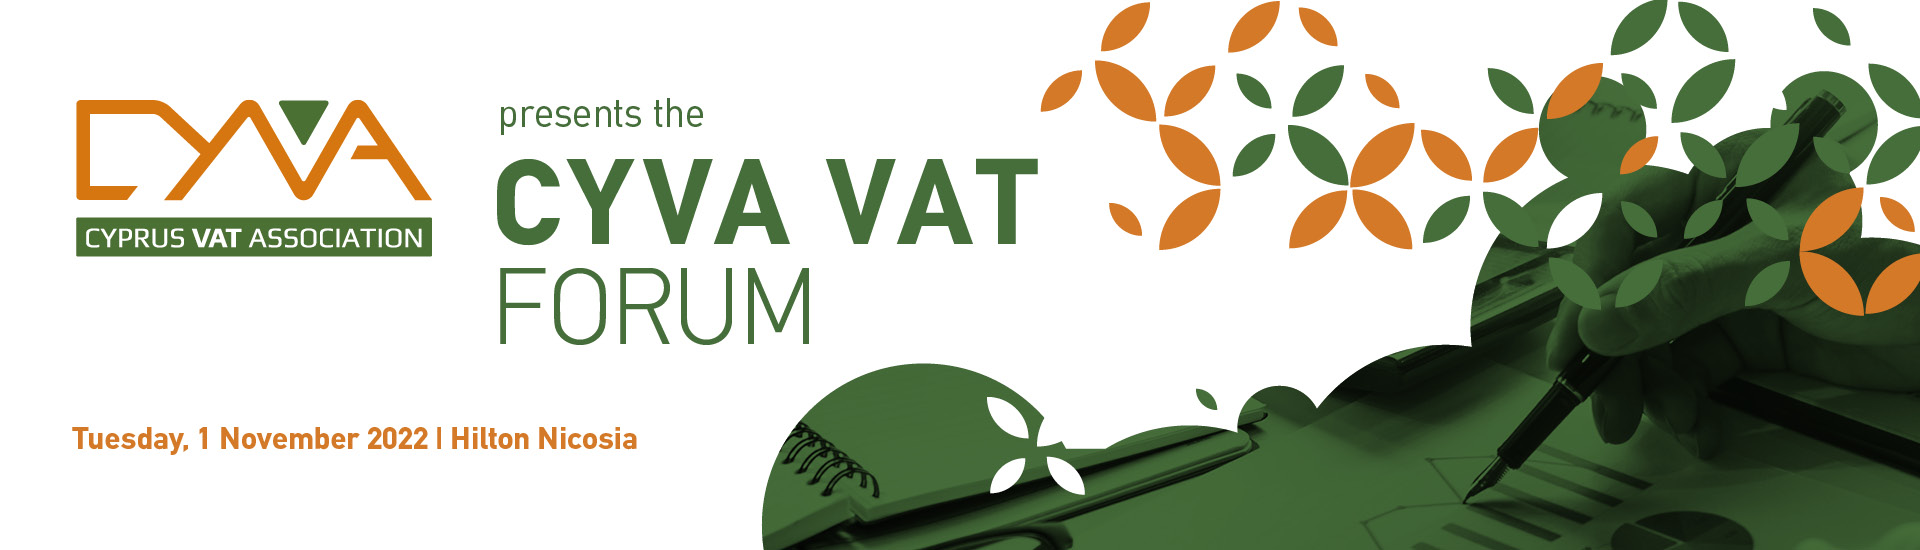 Cyprus VAT Association (CYVA)